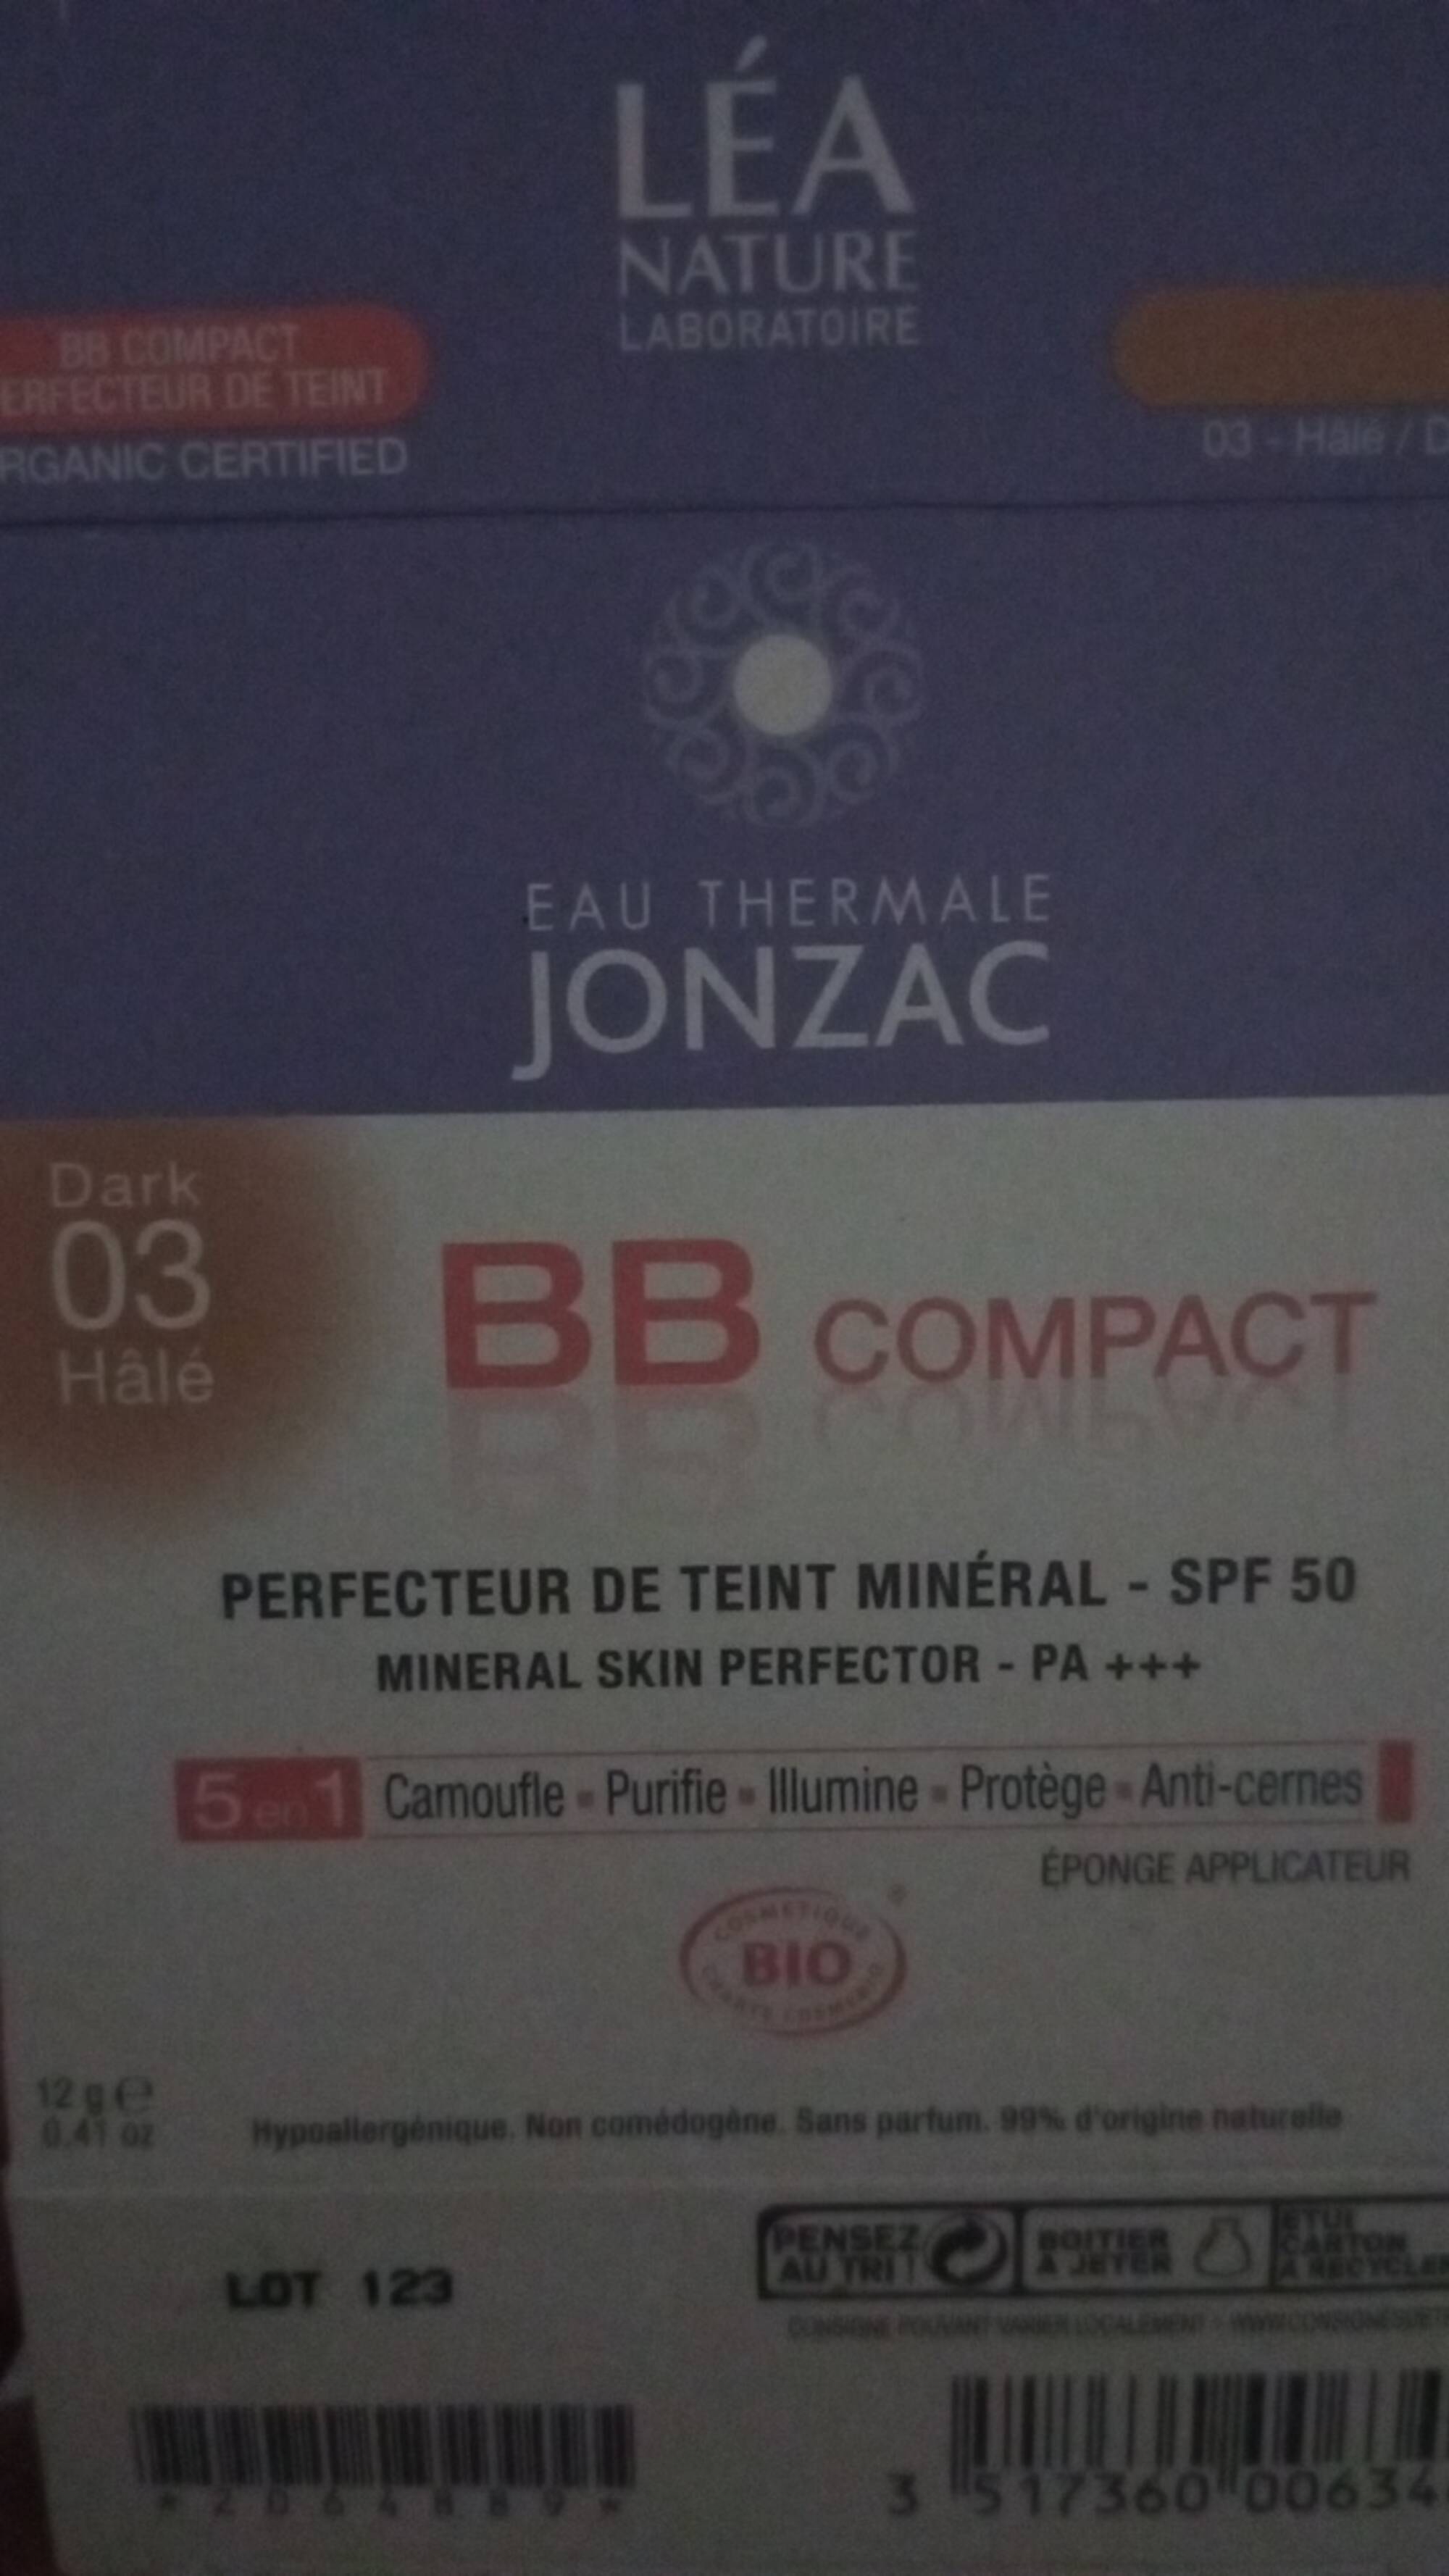 EAU THERMALE JONZAC - BB compact dark 03 hâlé